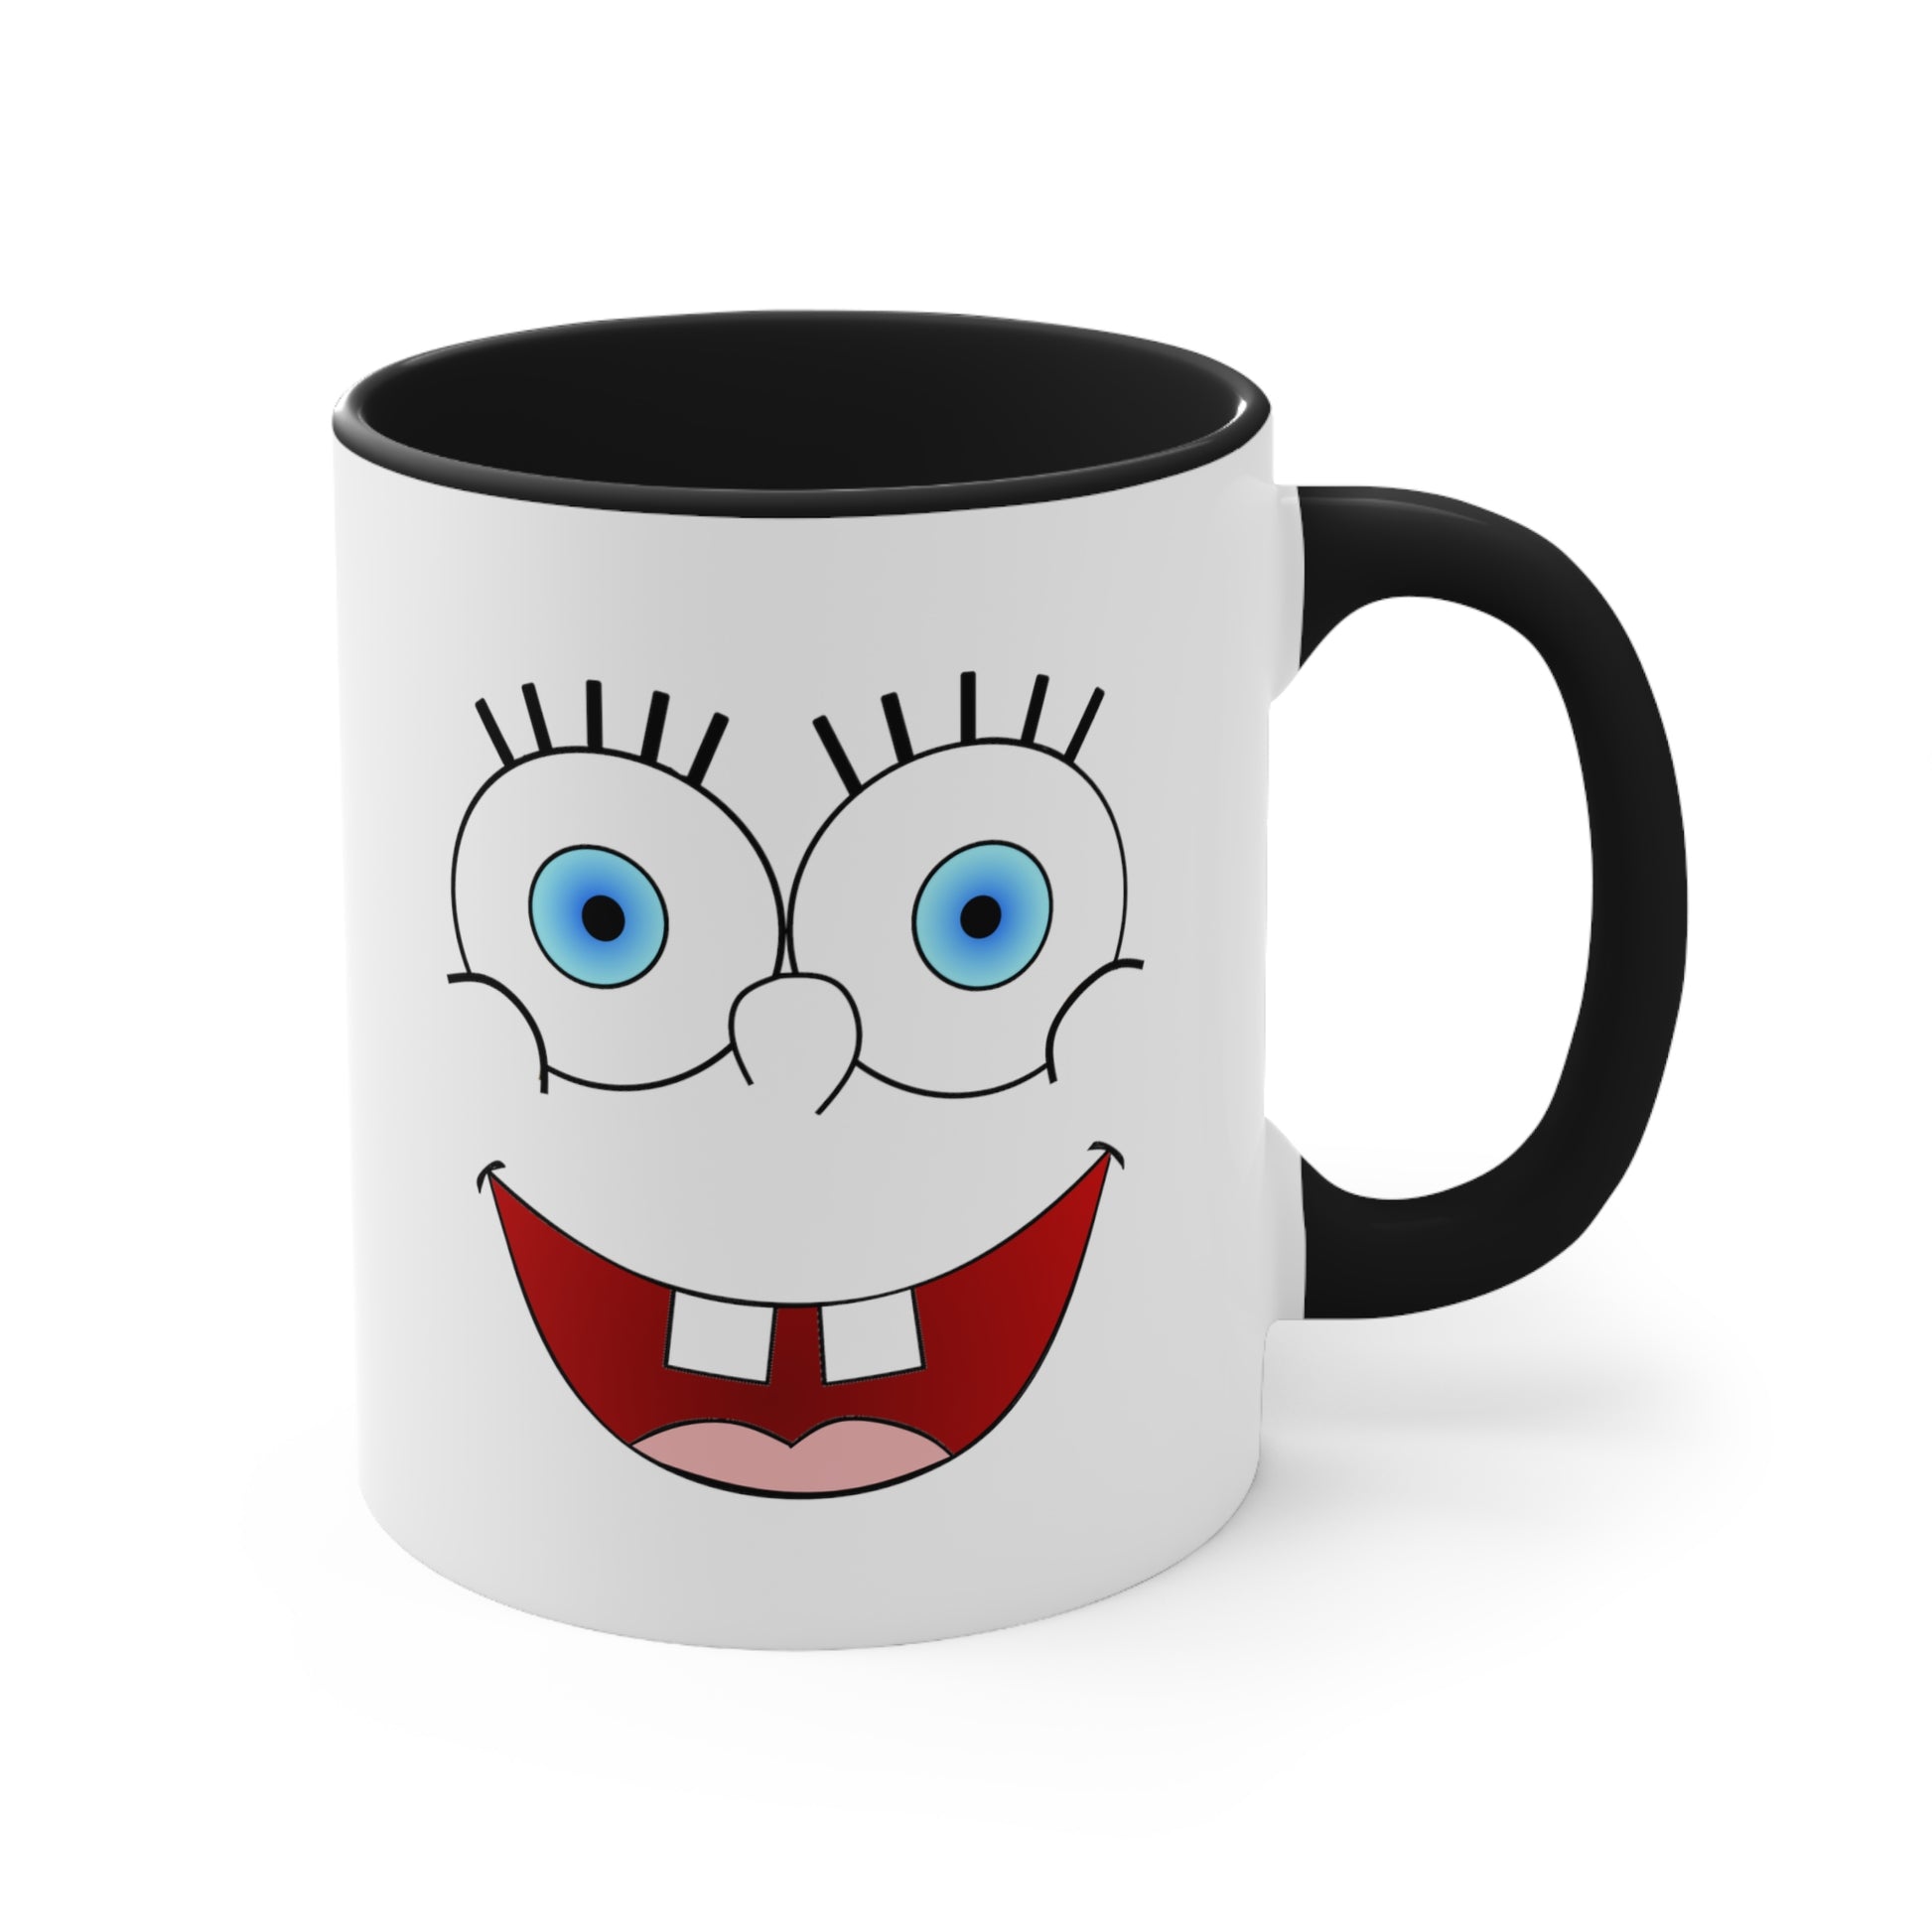 SpongeBob ish Coffee Mug - Double Sided Black Accent White Ceramic 11oz by TheGlassyLass.com